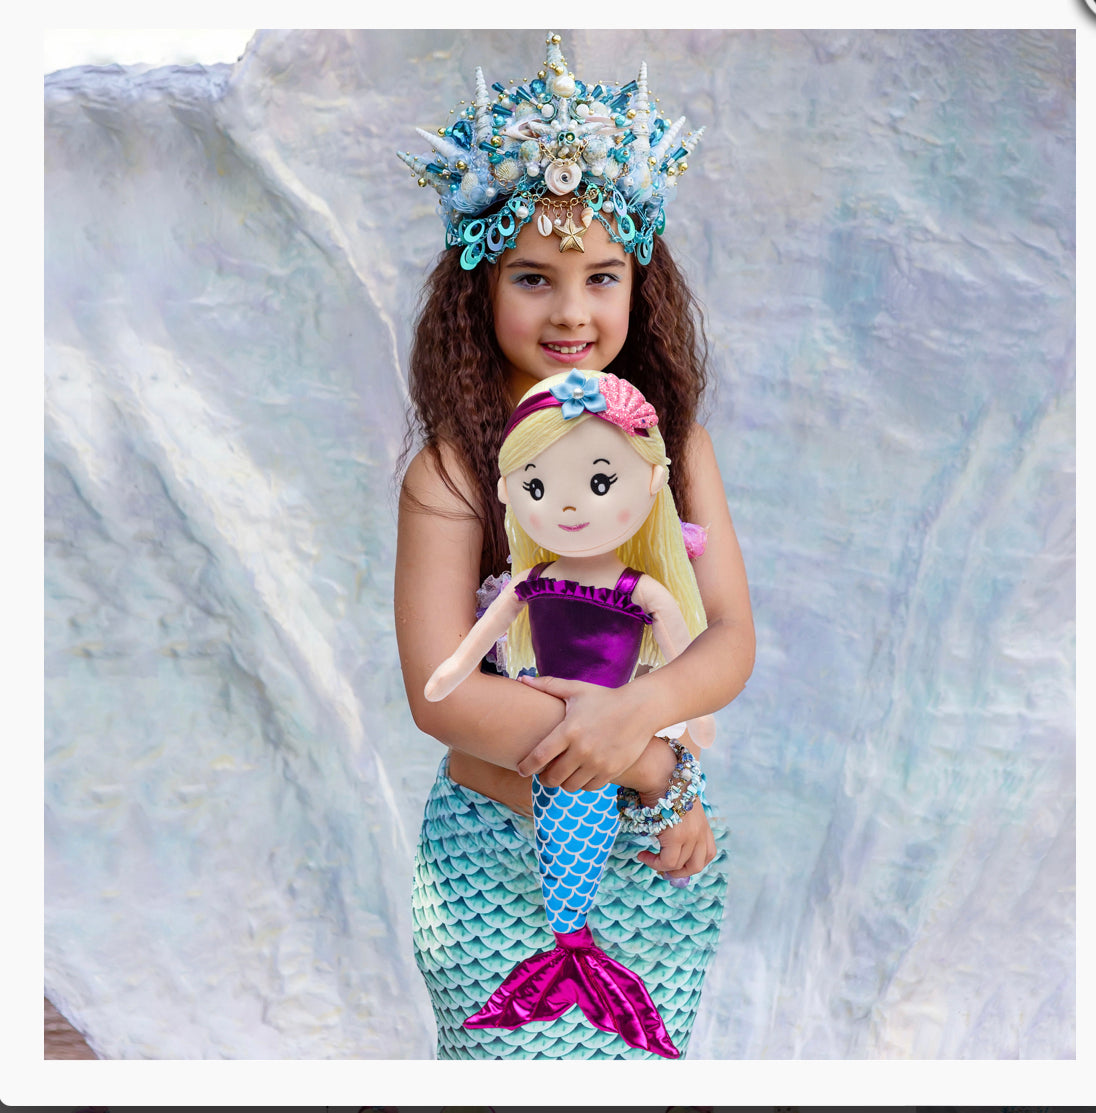 mermaid plush doll